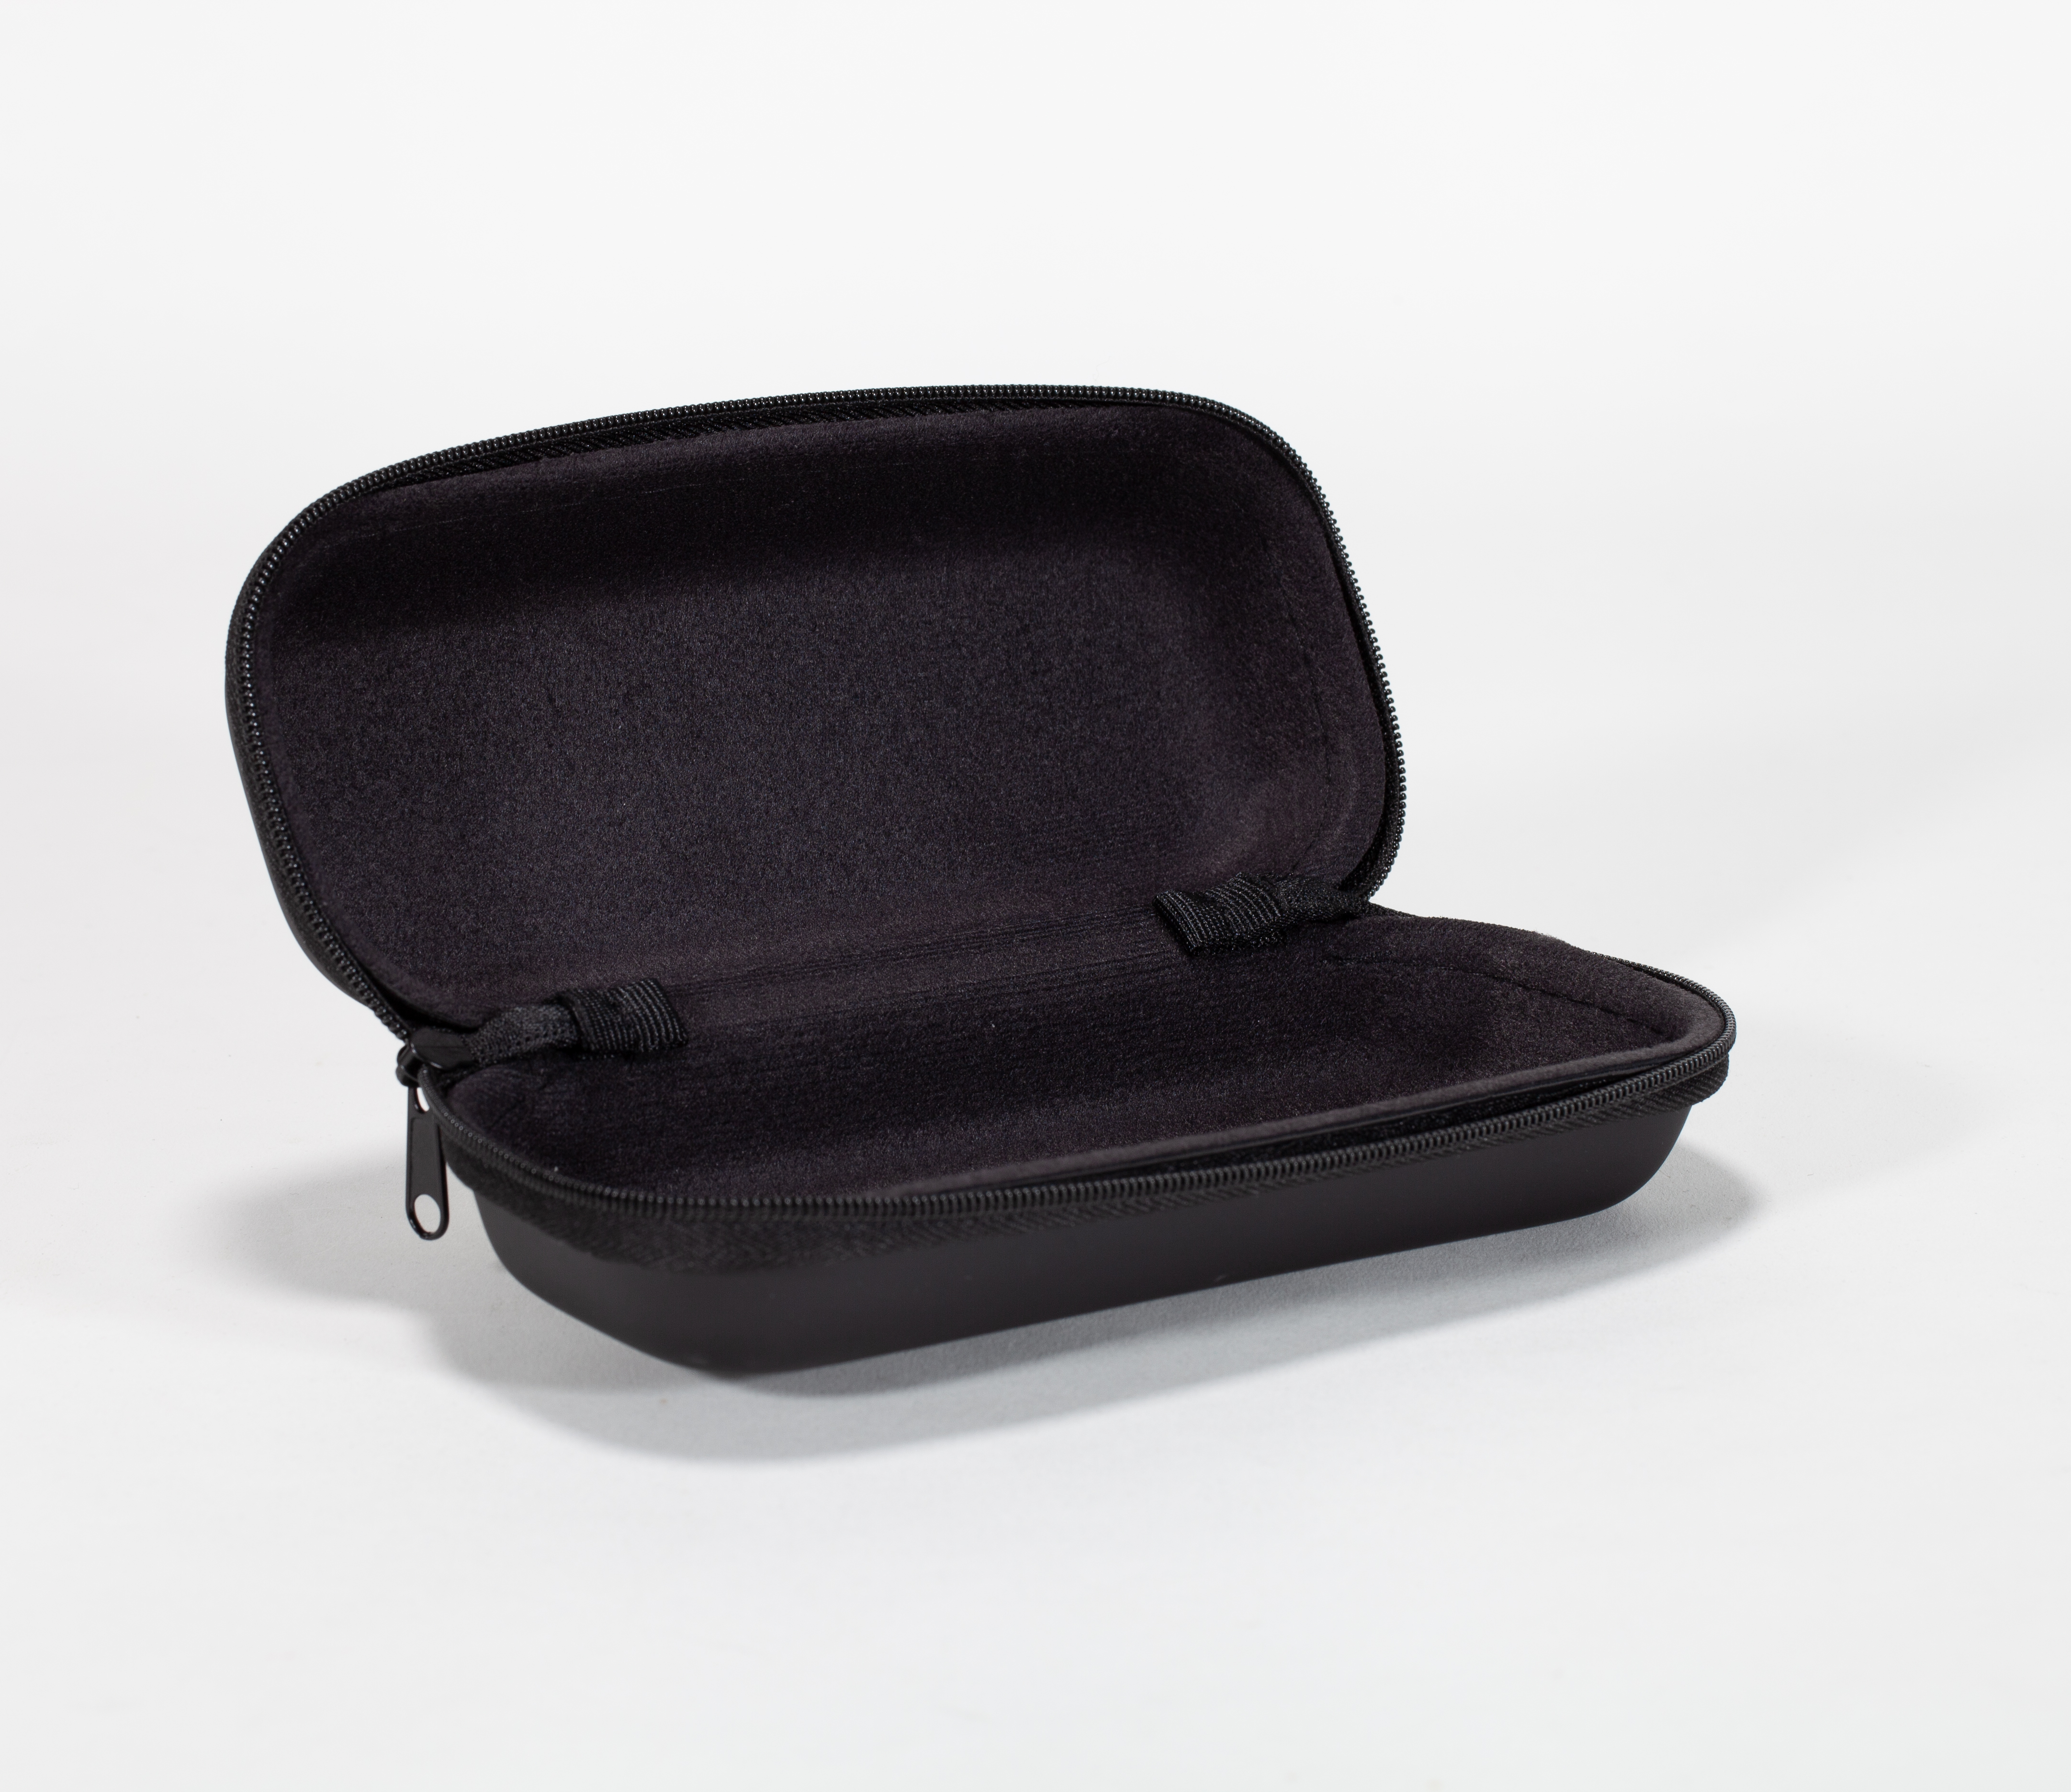 Hard EVA Case for Safety Glasses Travel Protective Carrying Storage Bag